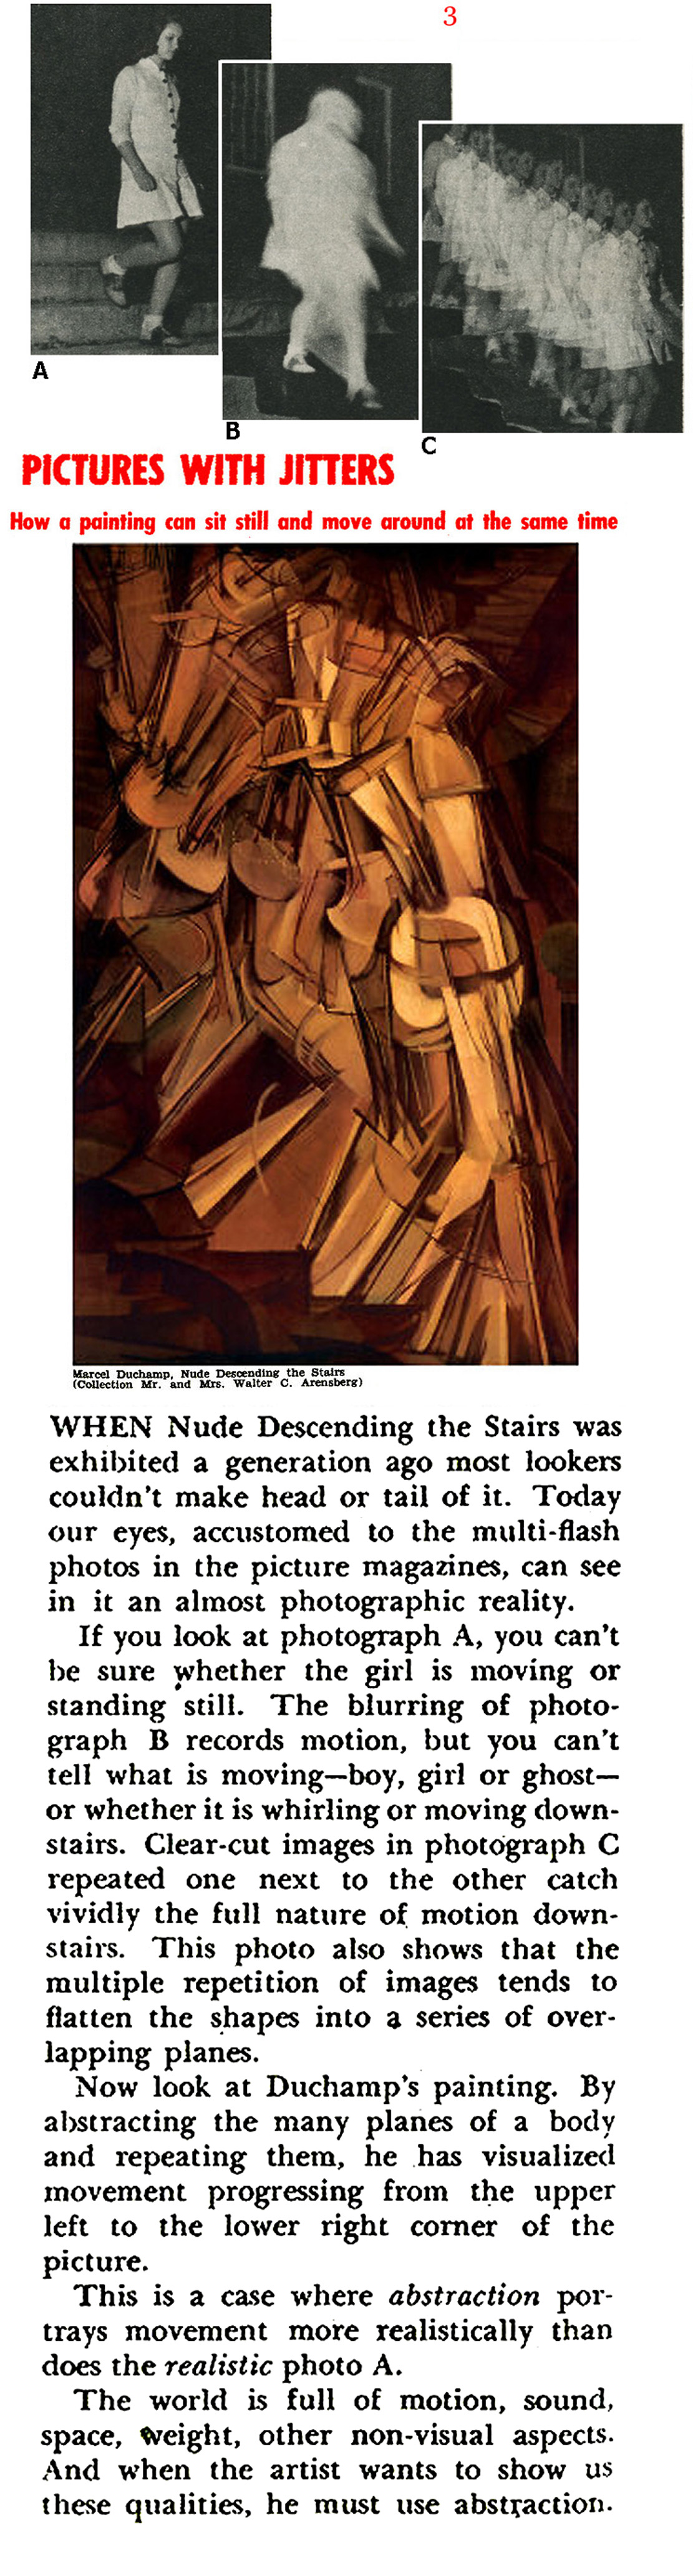 Explaining Abstract Art (Pageant Magazine, 1950)